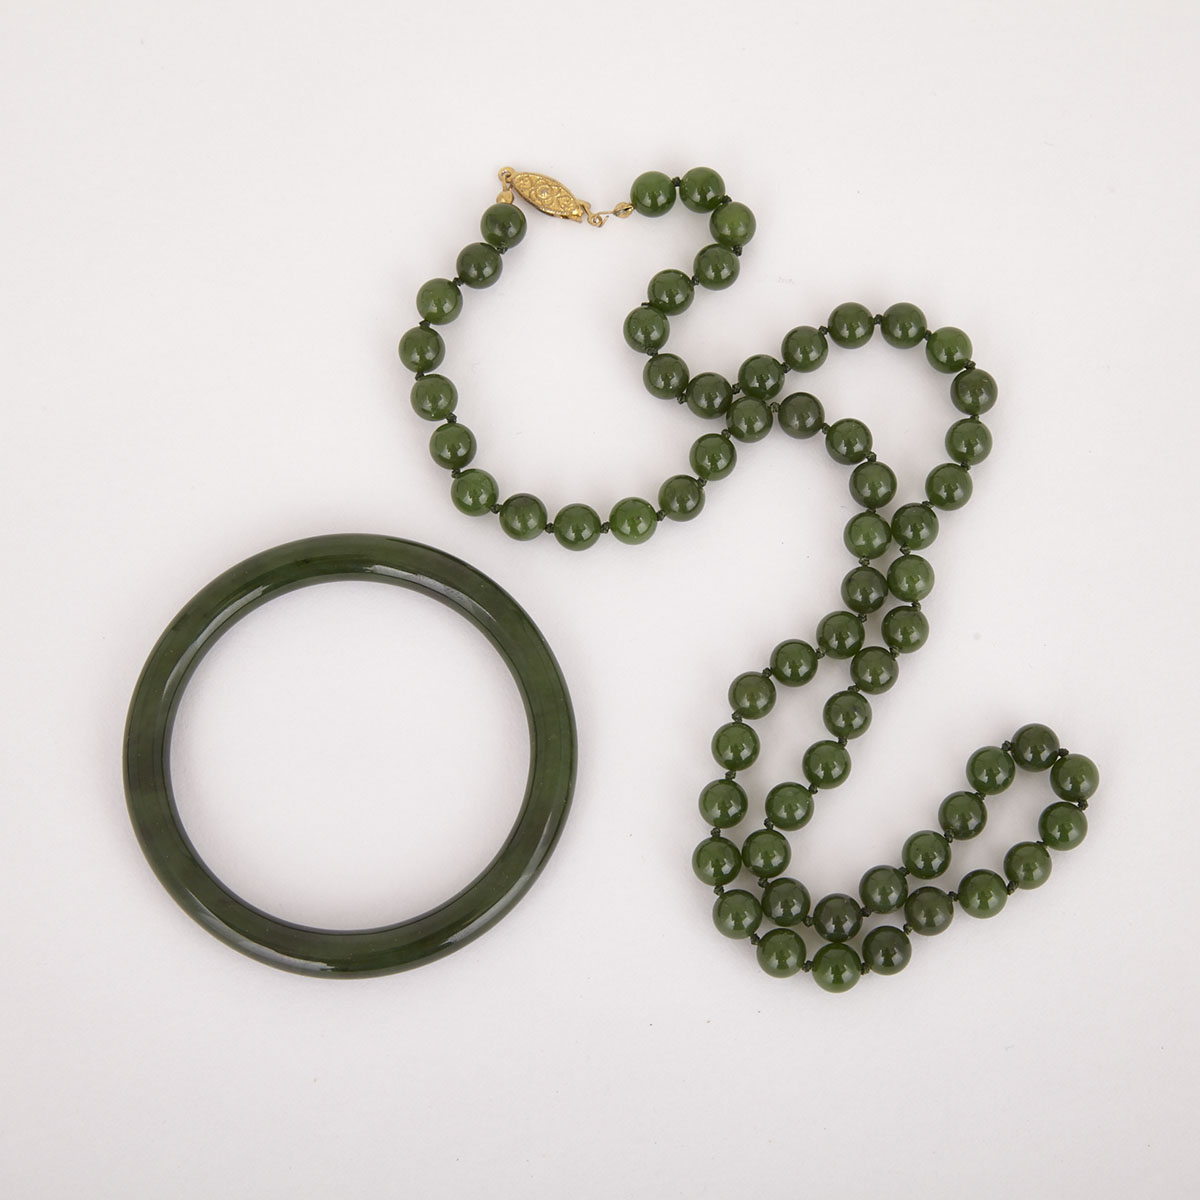 Spinach Jade Bangle and Beads